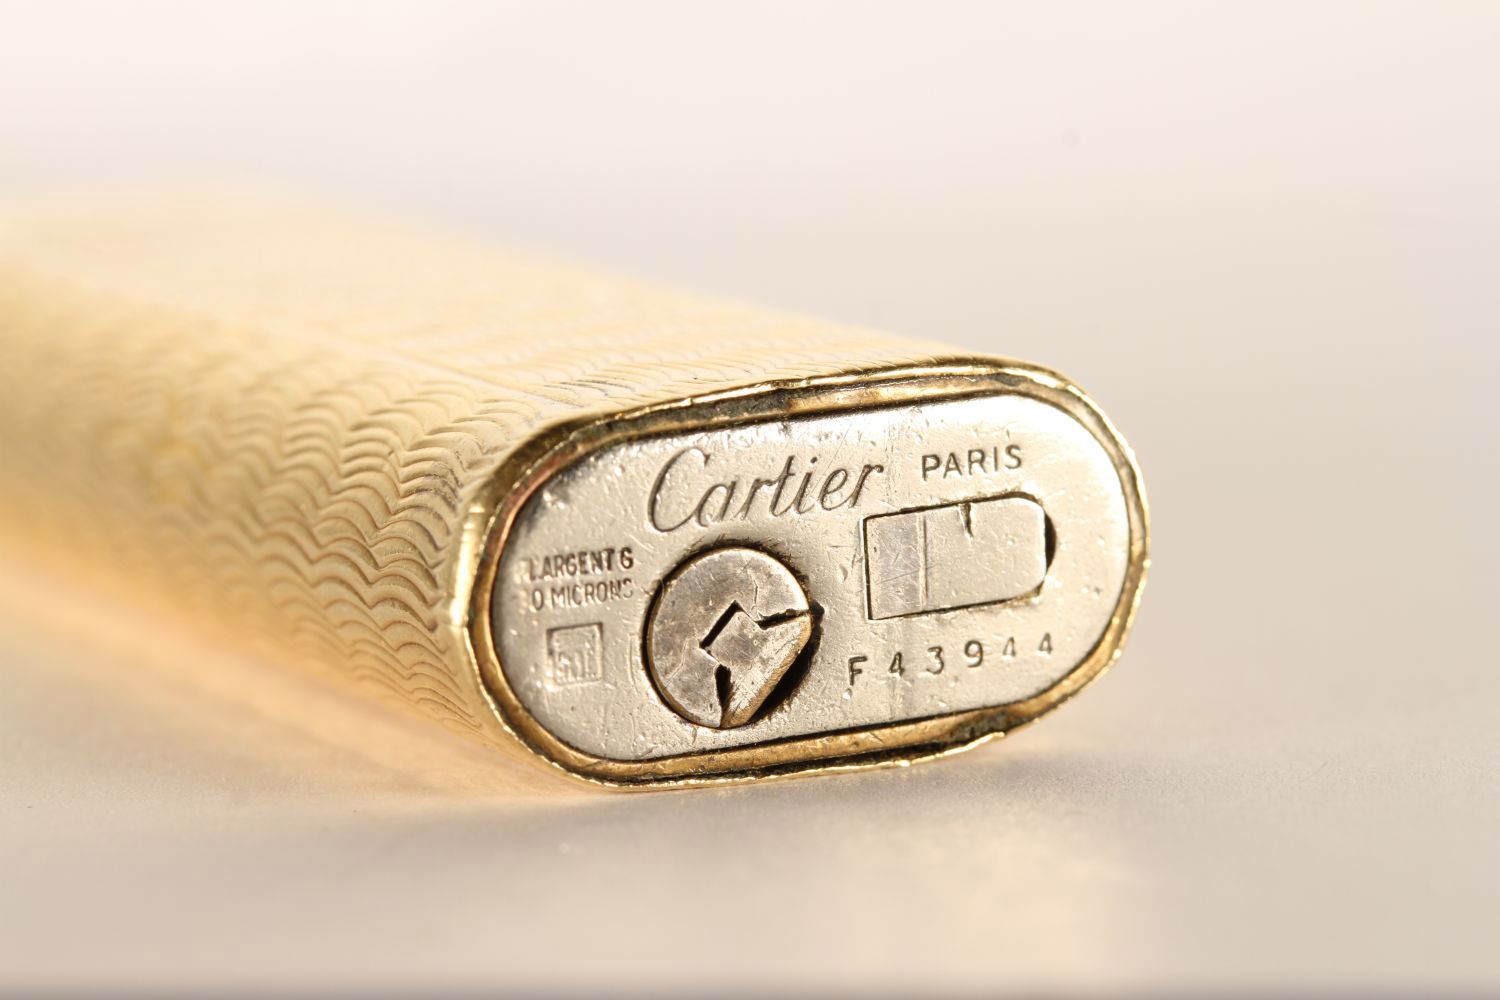 Cartier Lighter, gold patterned design, approximate length 7cm - Image 2 of 4